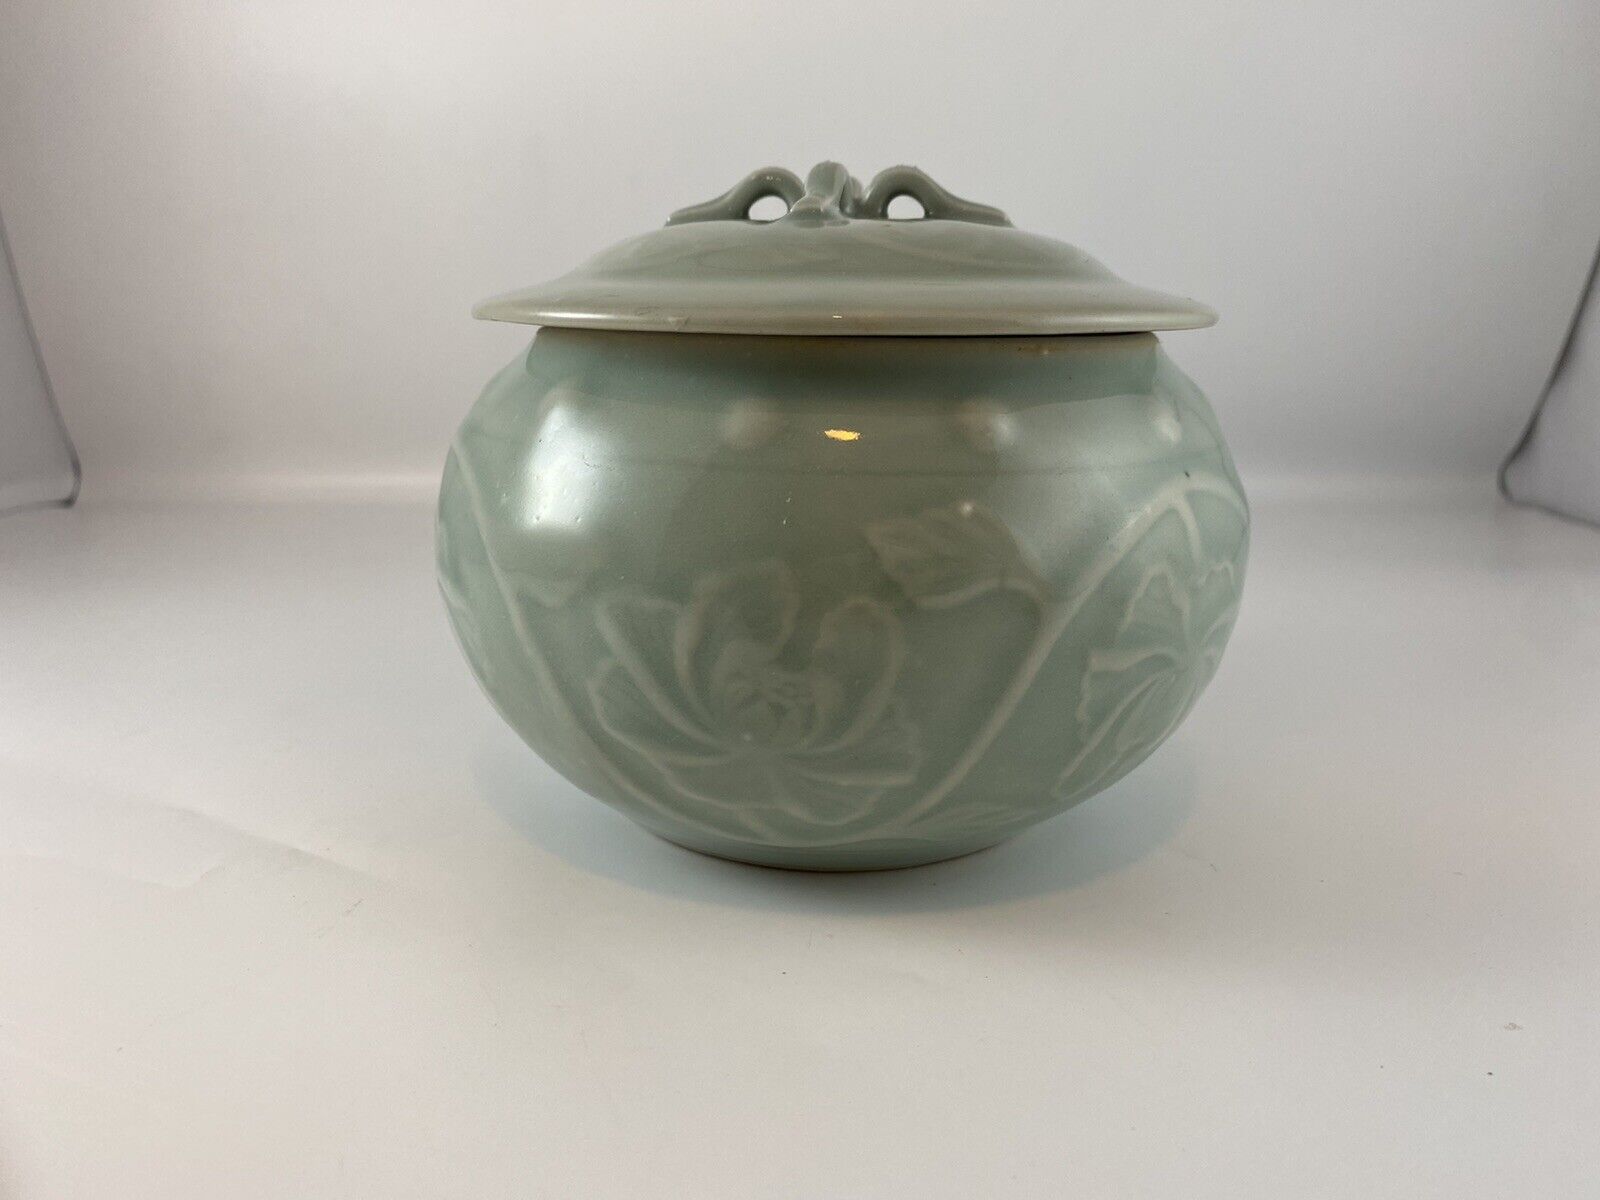 Green Celadon Jar With Lid, Large, Chinese, More Modern Embossed Lotus Flower